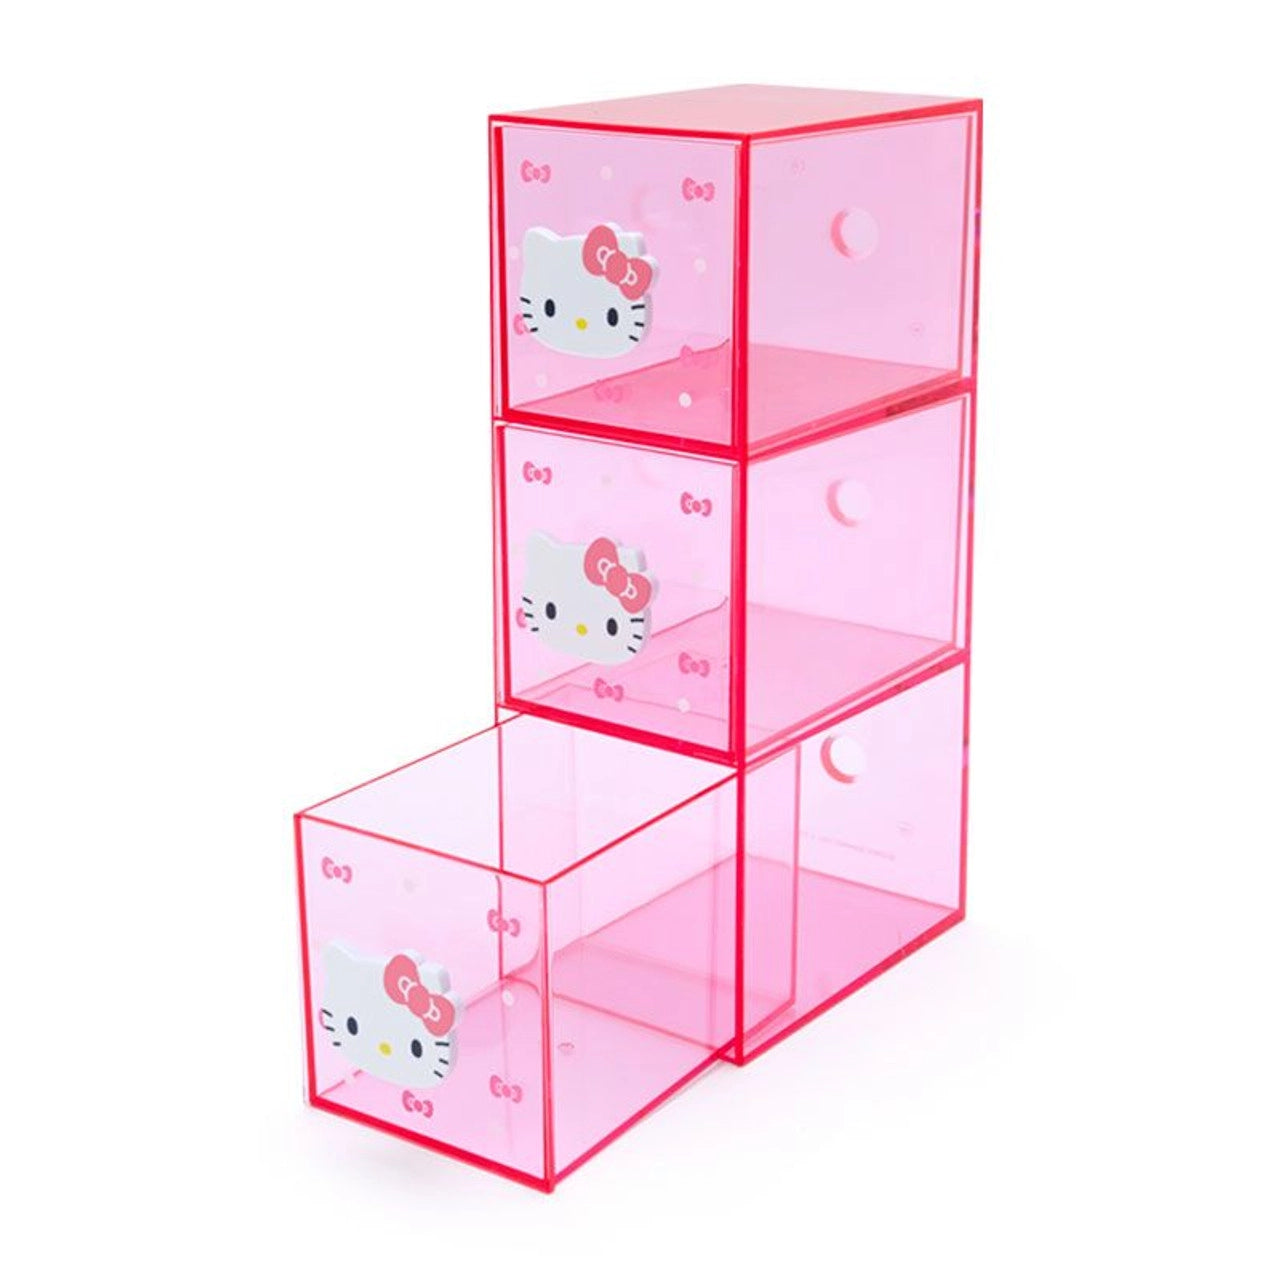 Sanrio Hello Kitty Accessory Drawer